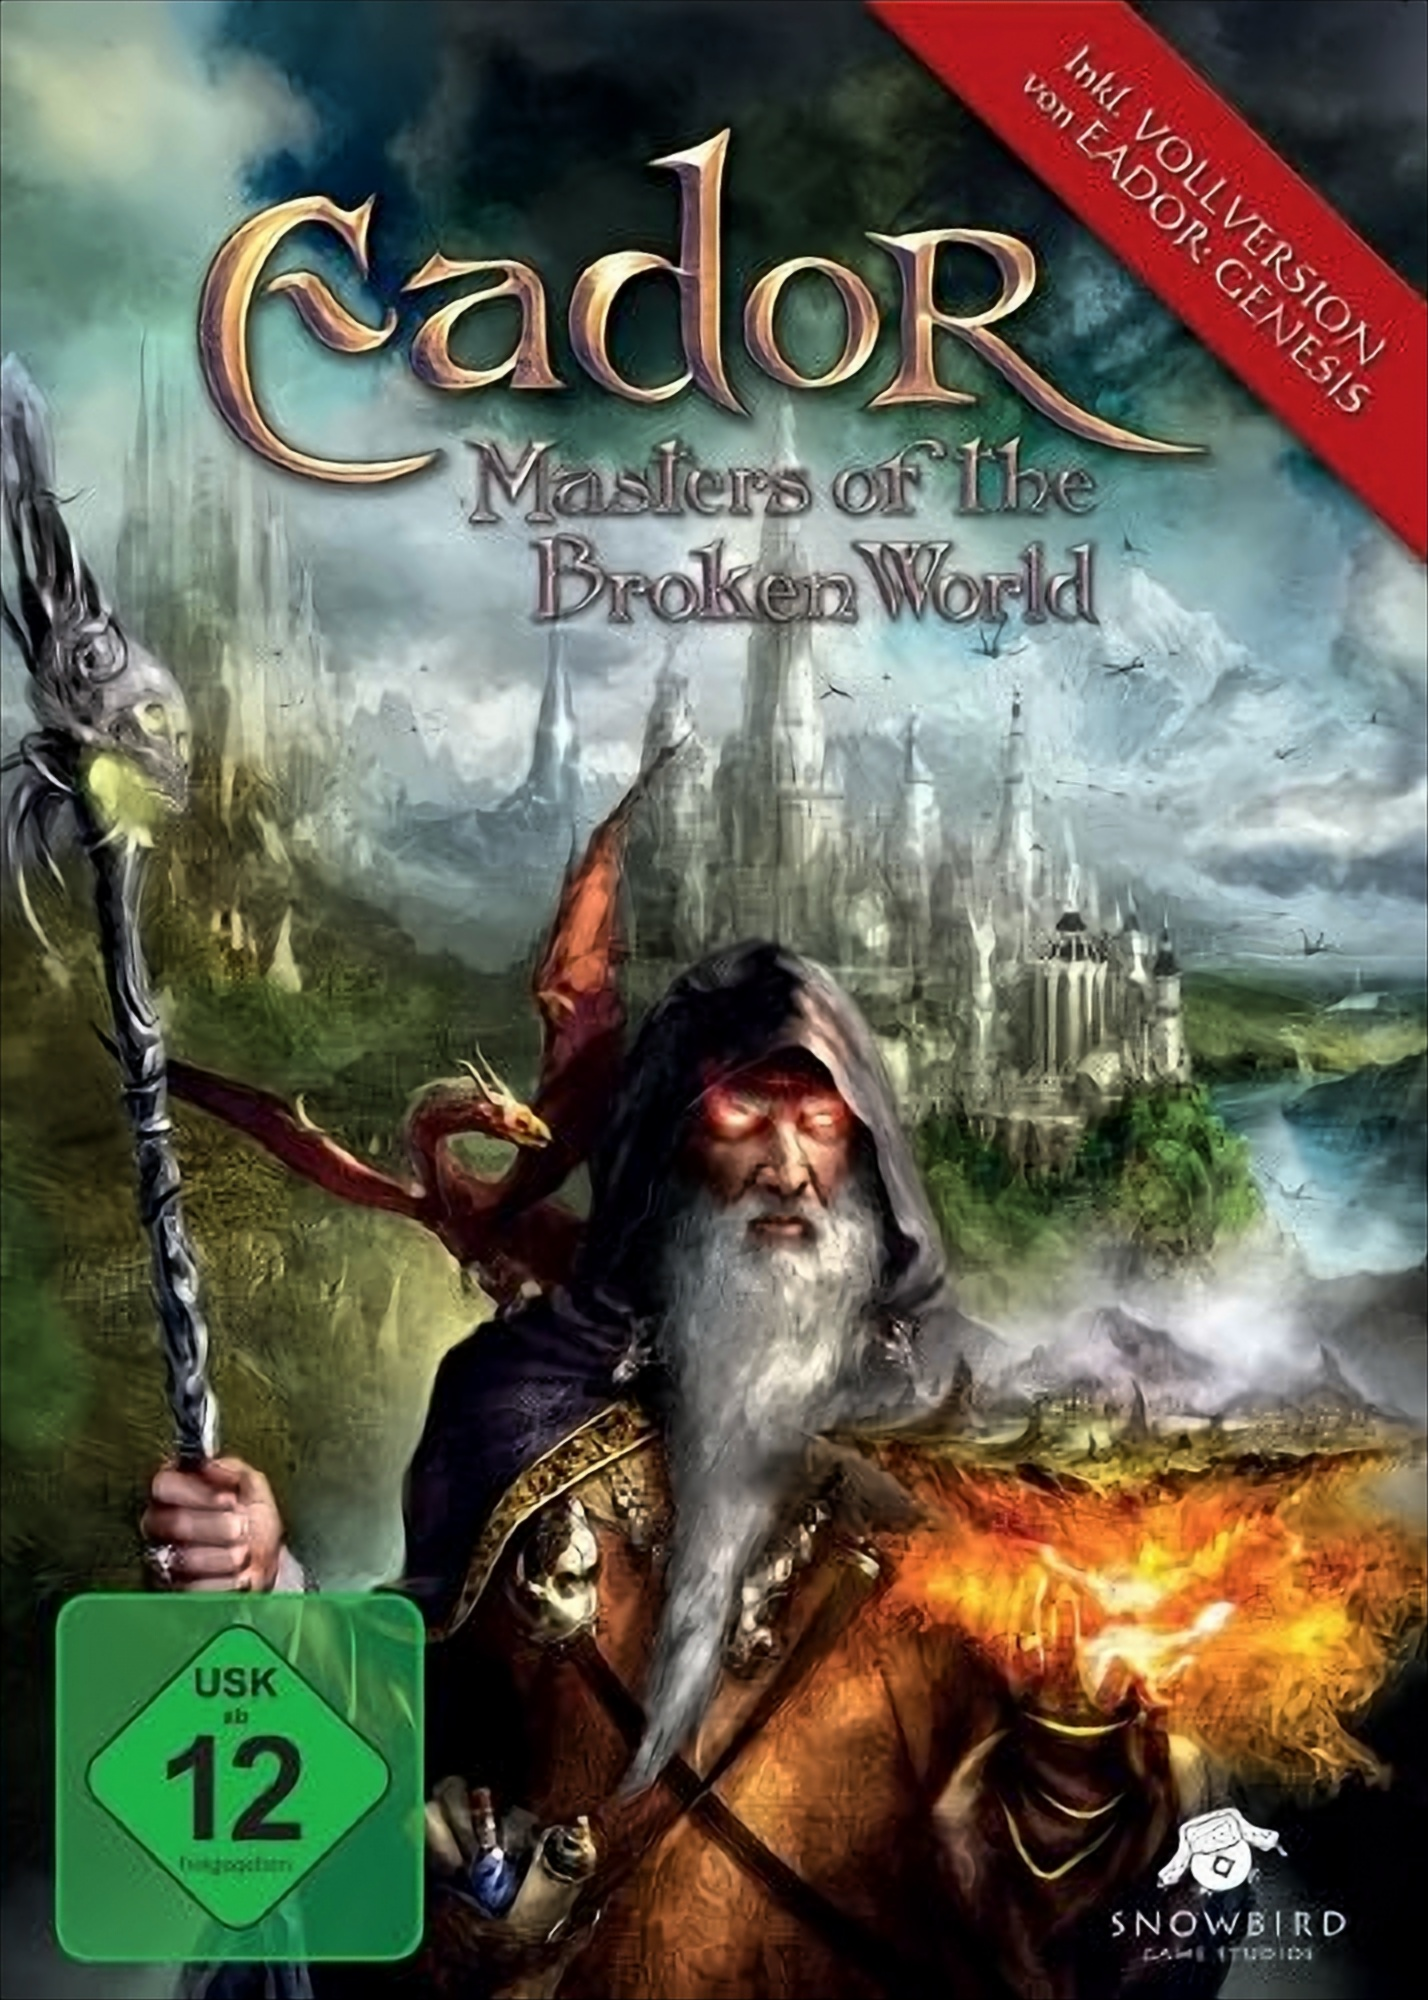 - The Eador World Broken - Of Masters [PC]